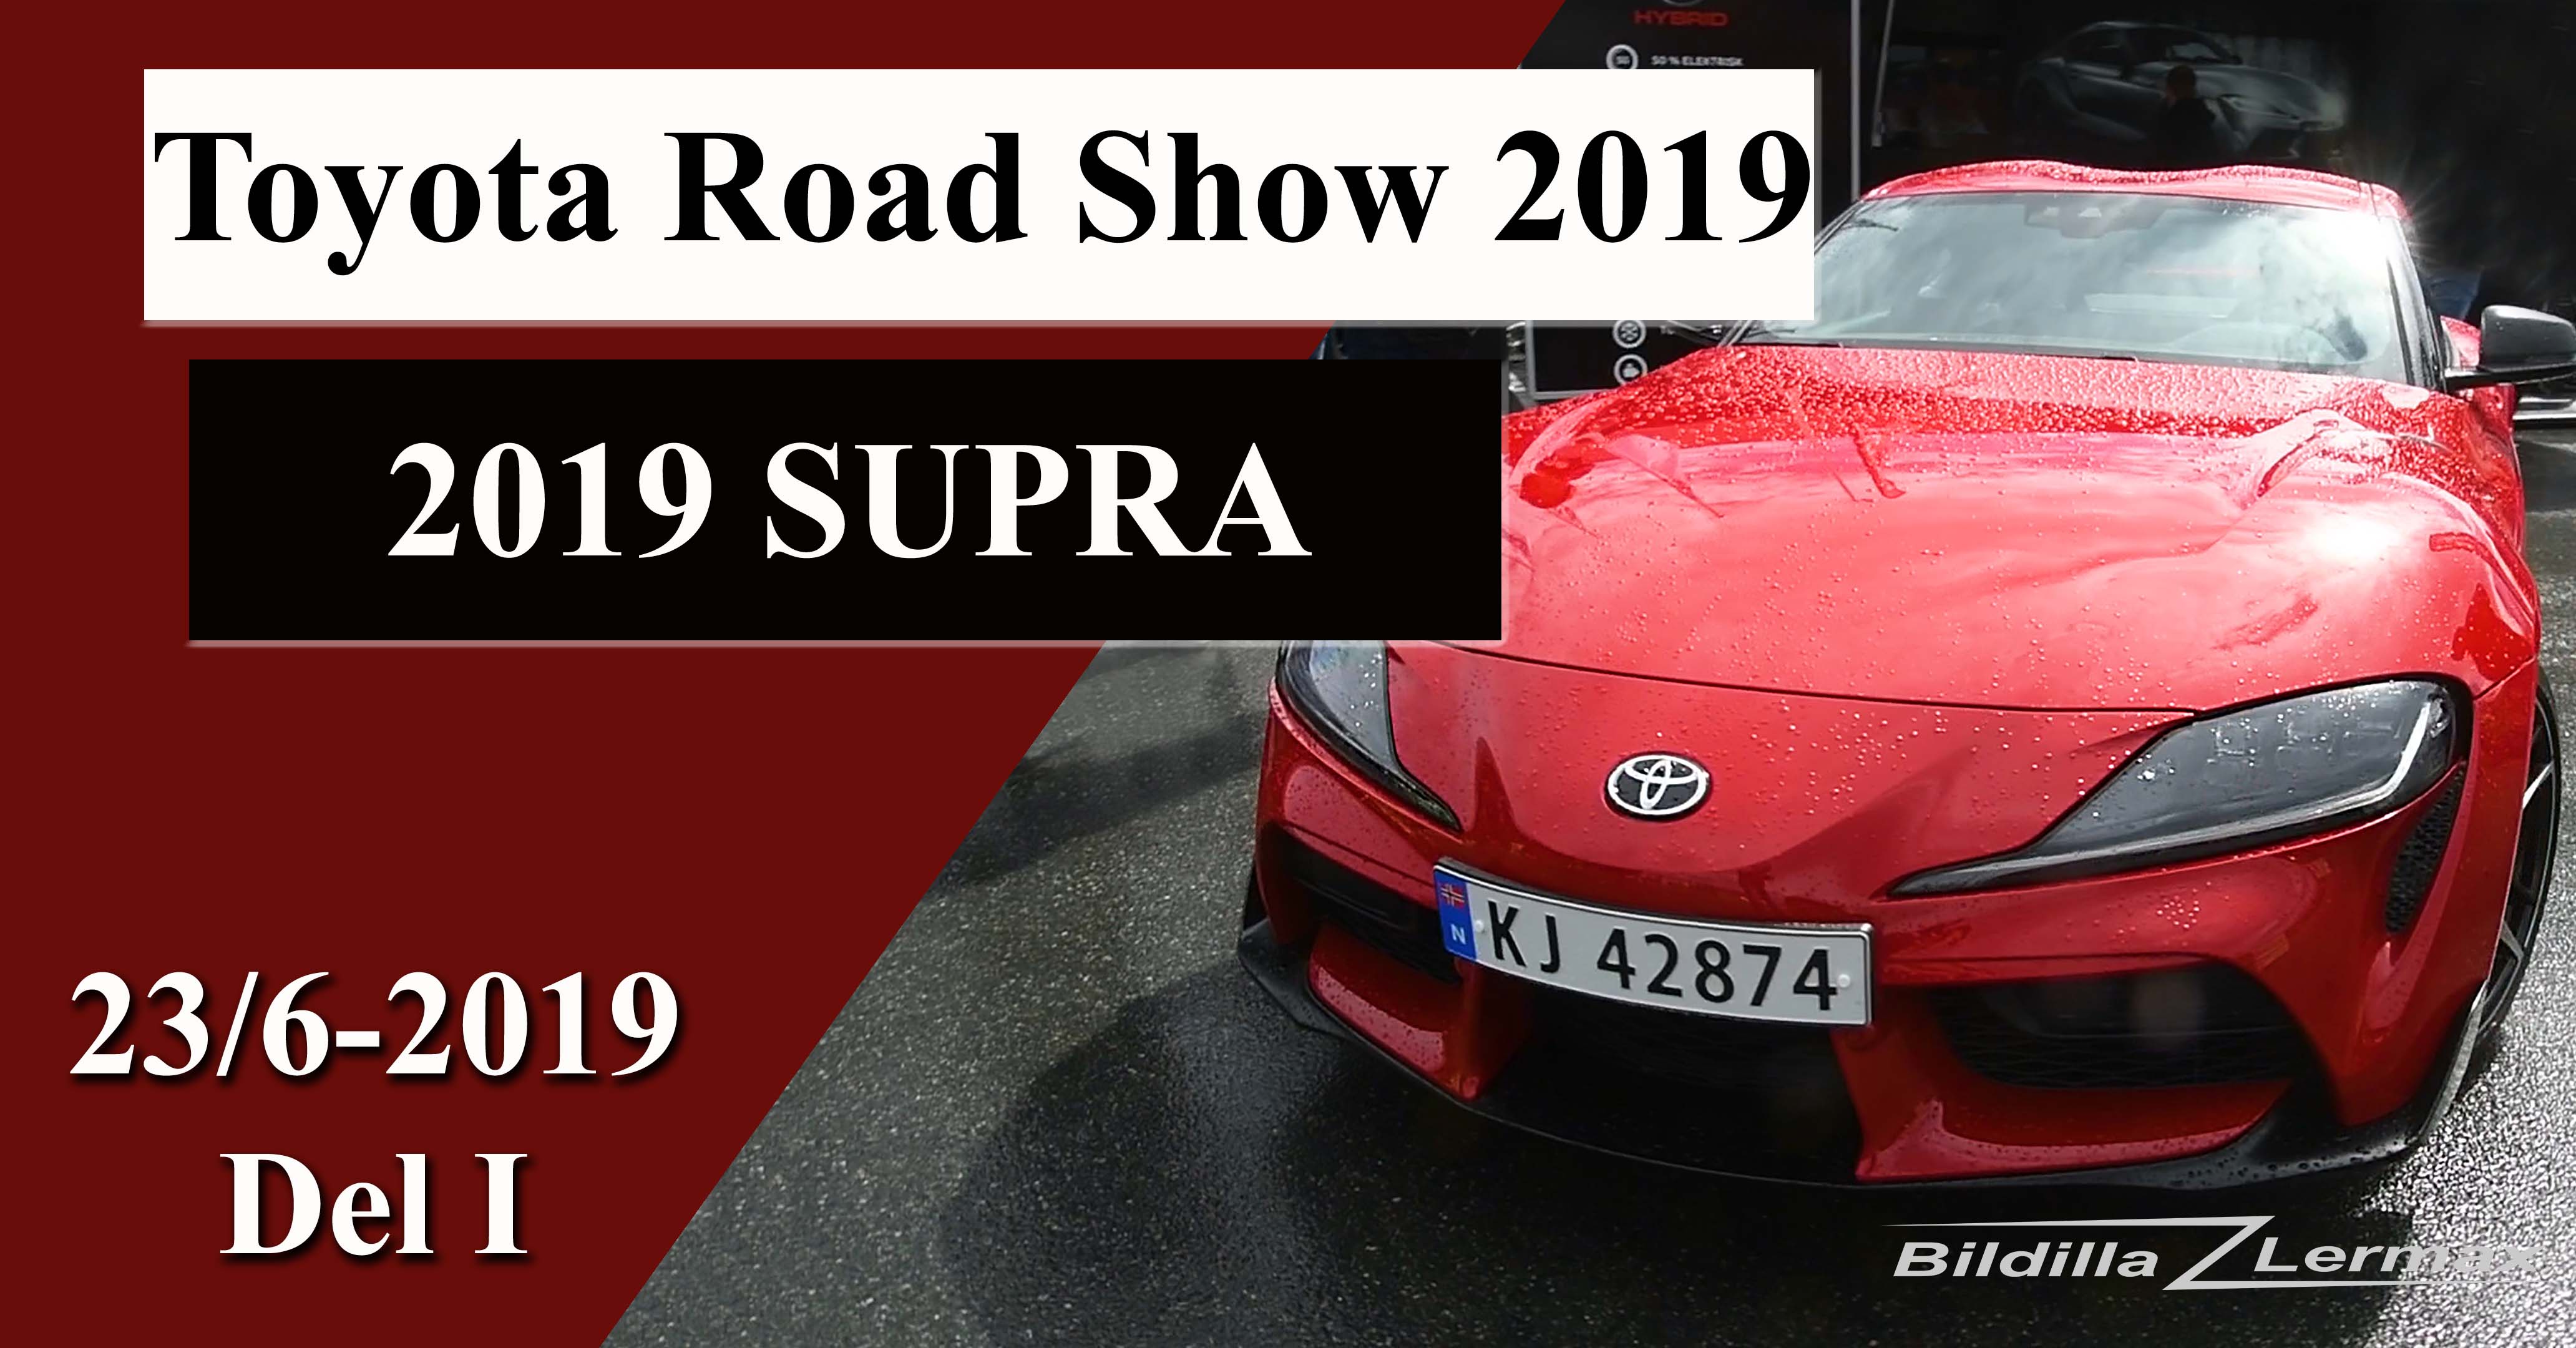 Toyota Road Show 2019